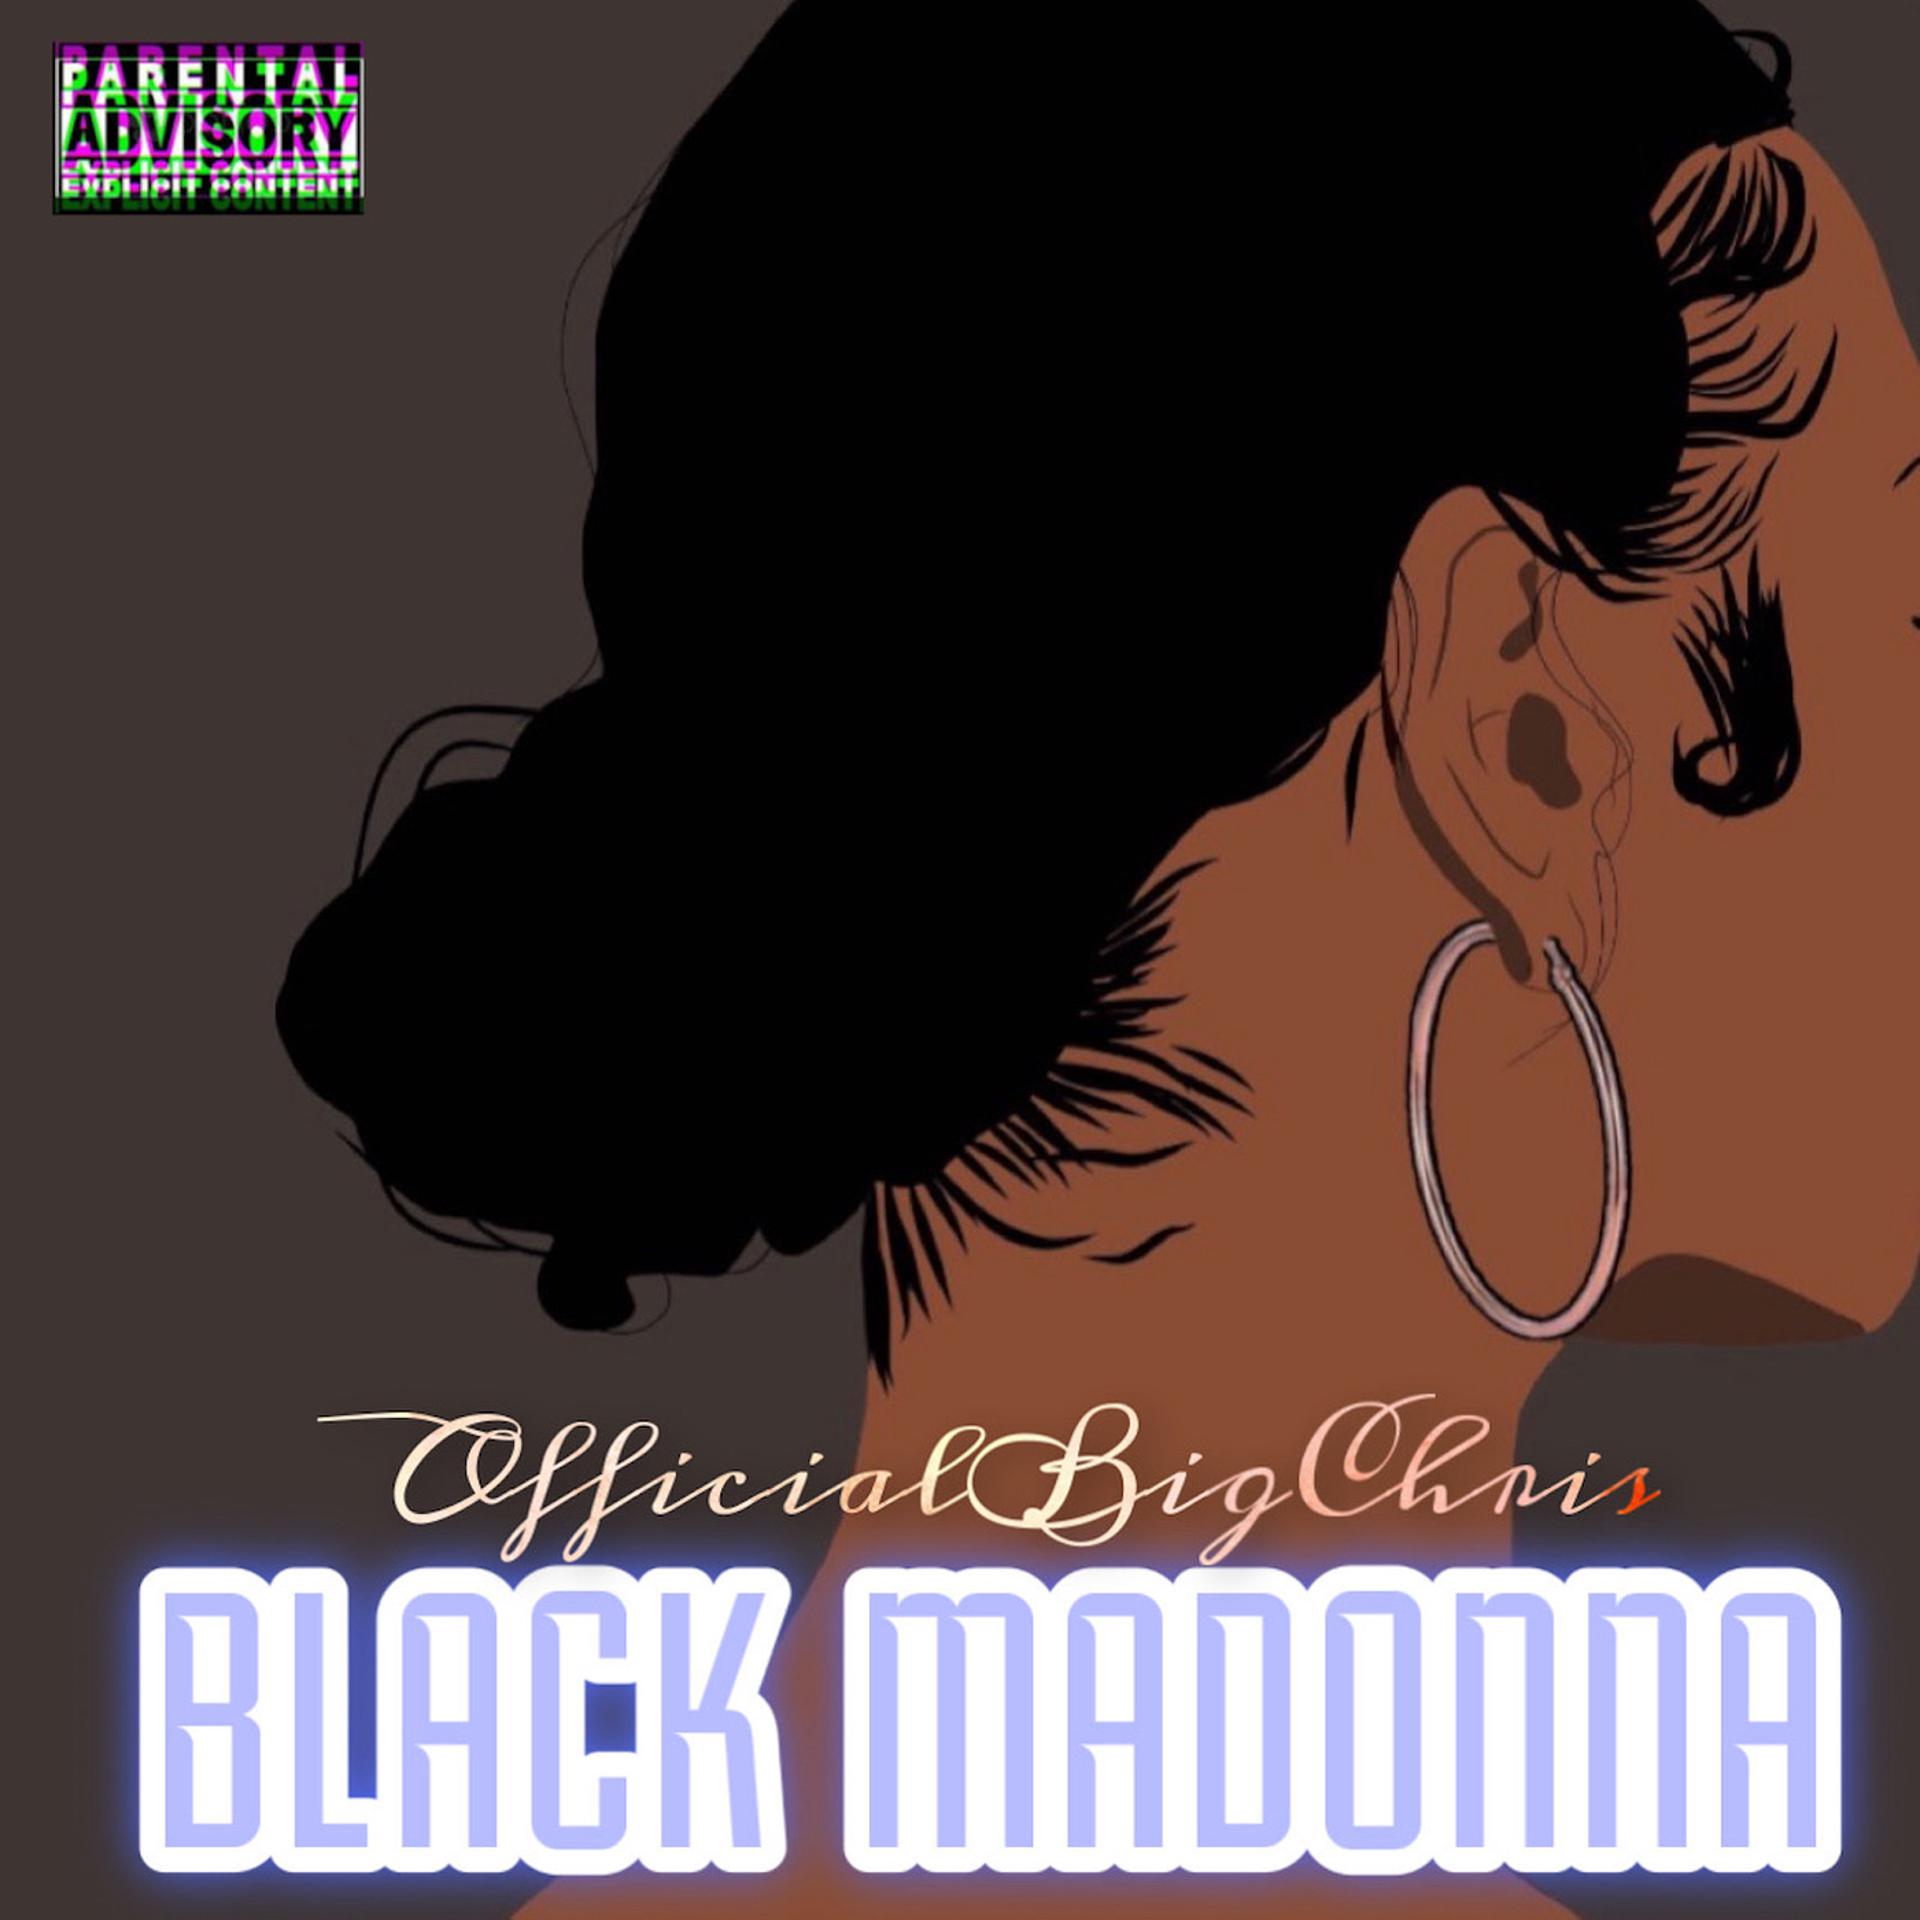 Постер альбома Black Madonna